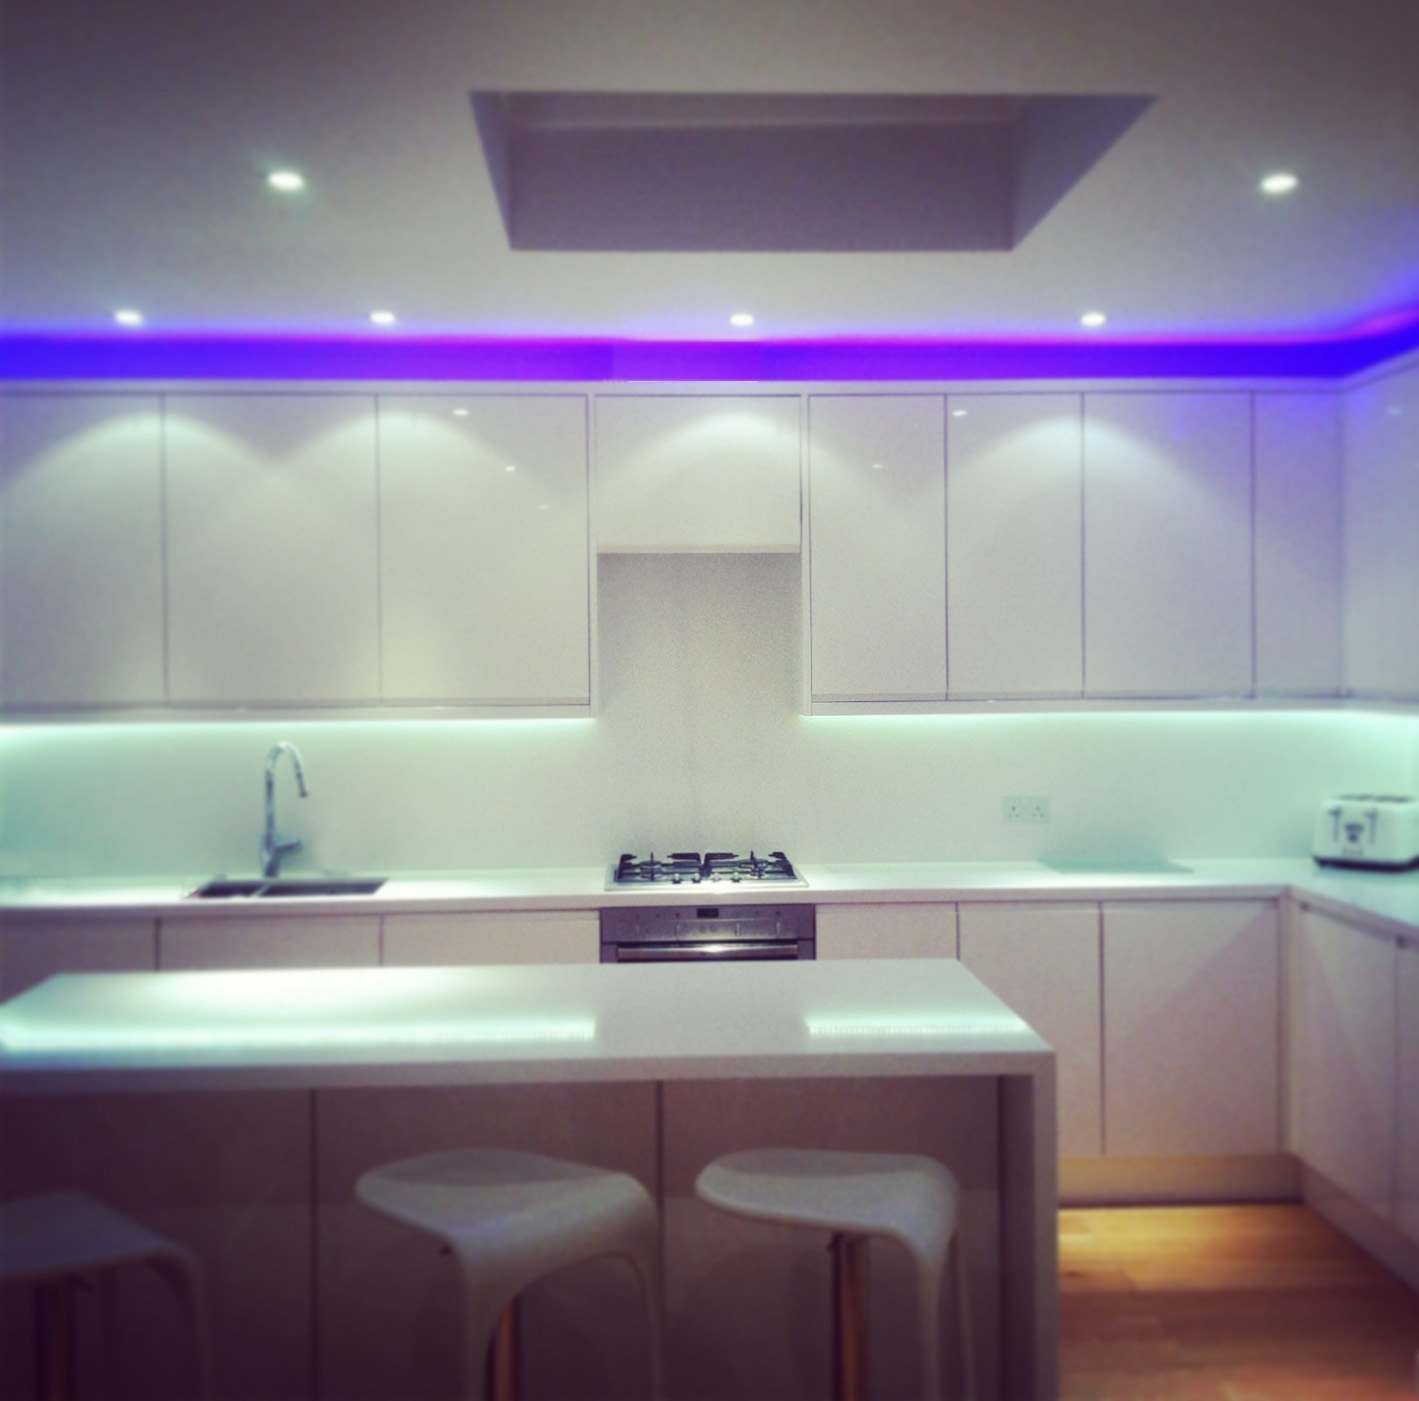 Led Lights For Kitchen Ceilingled kitchen lighting